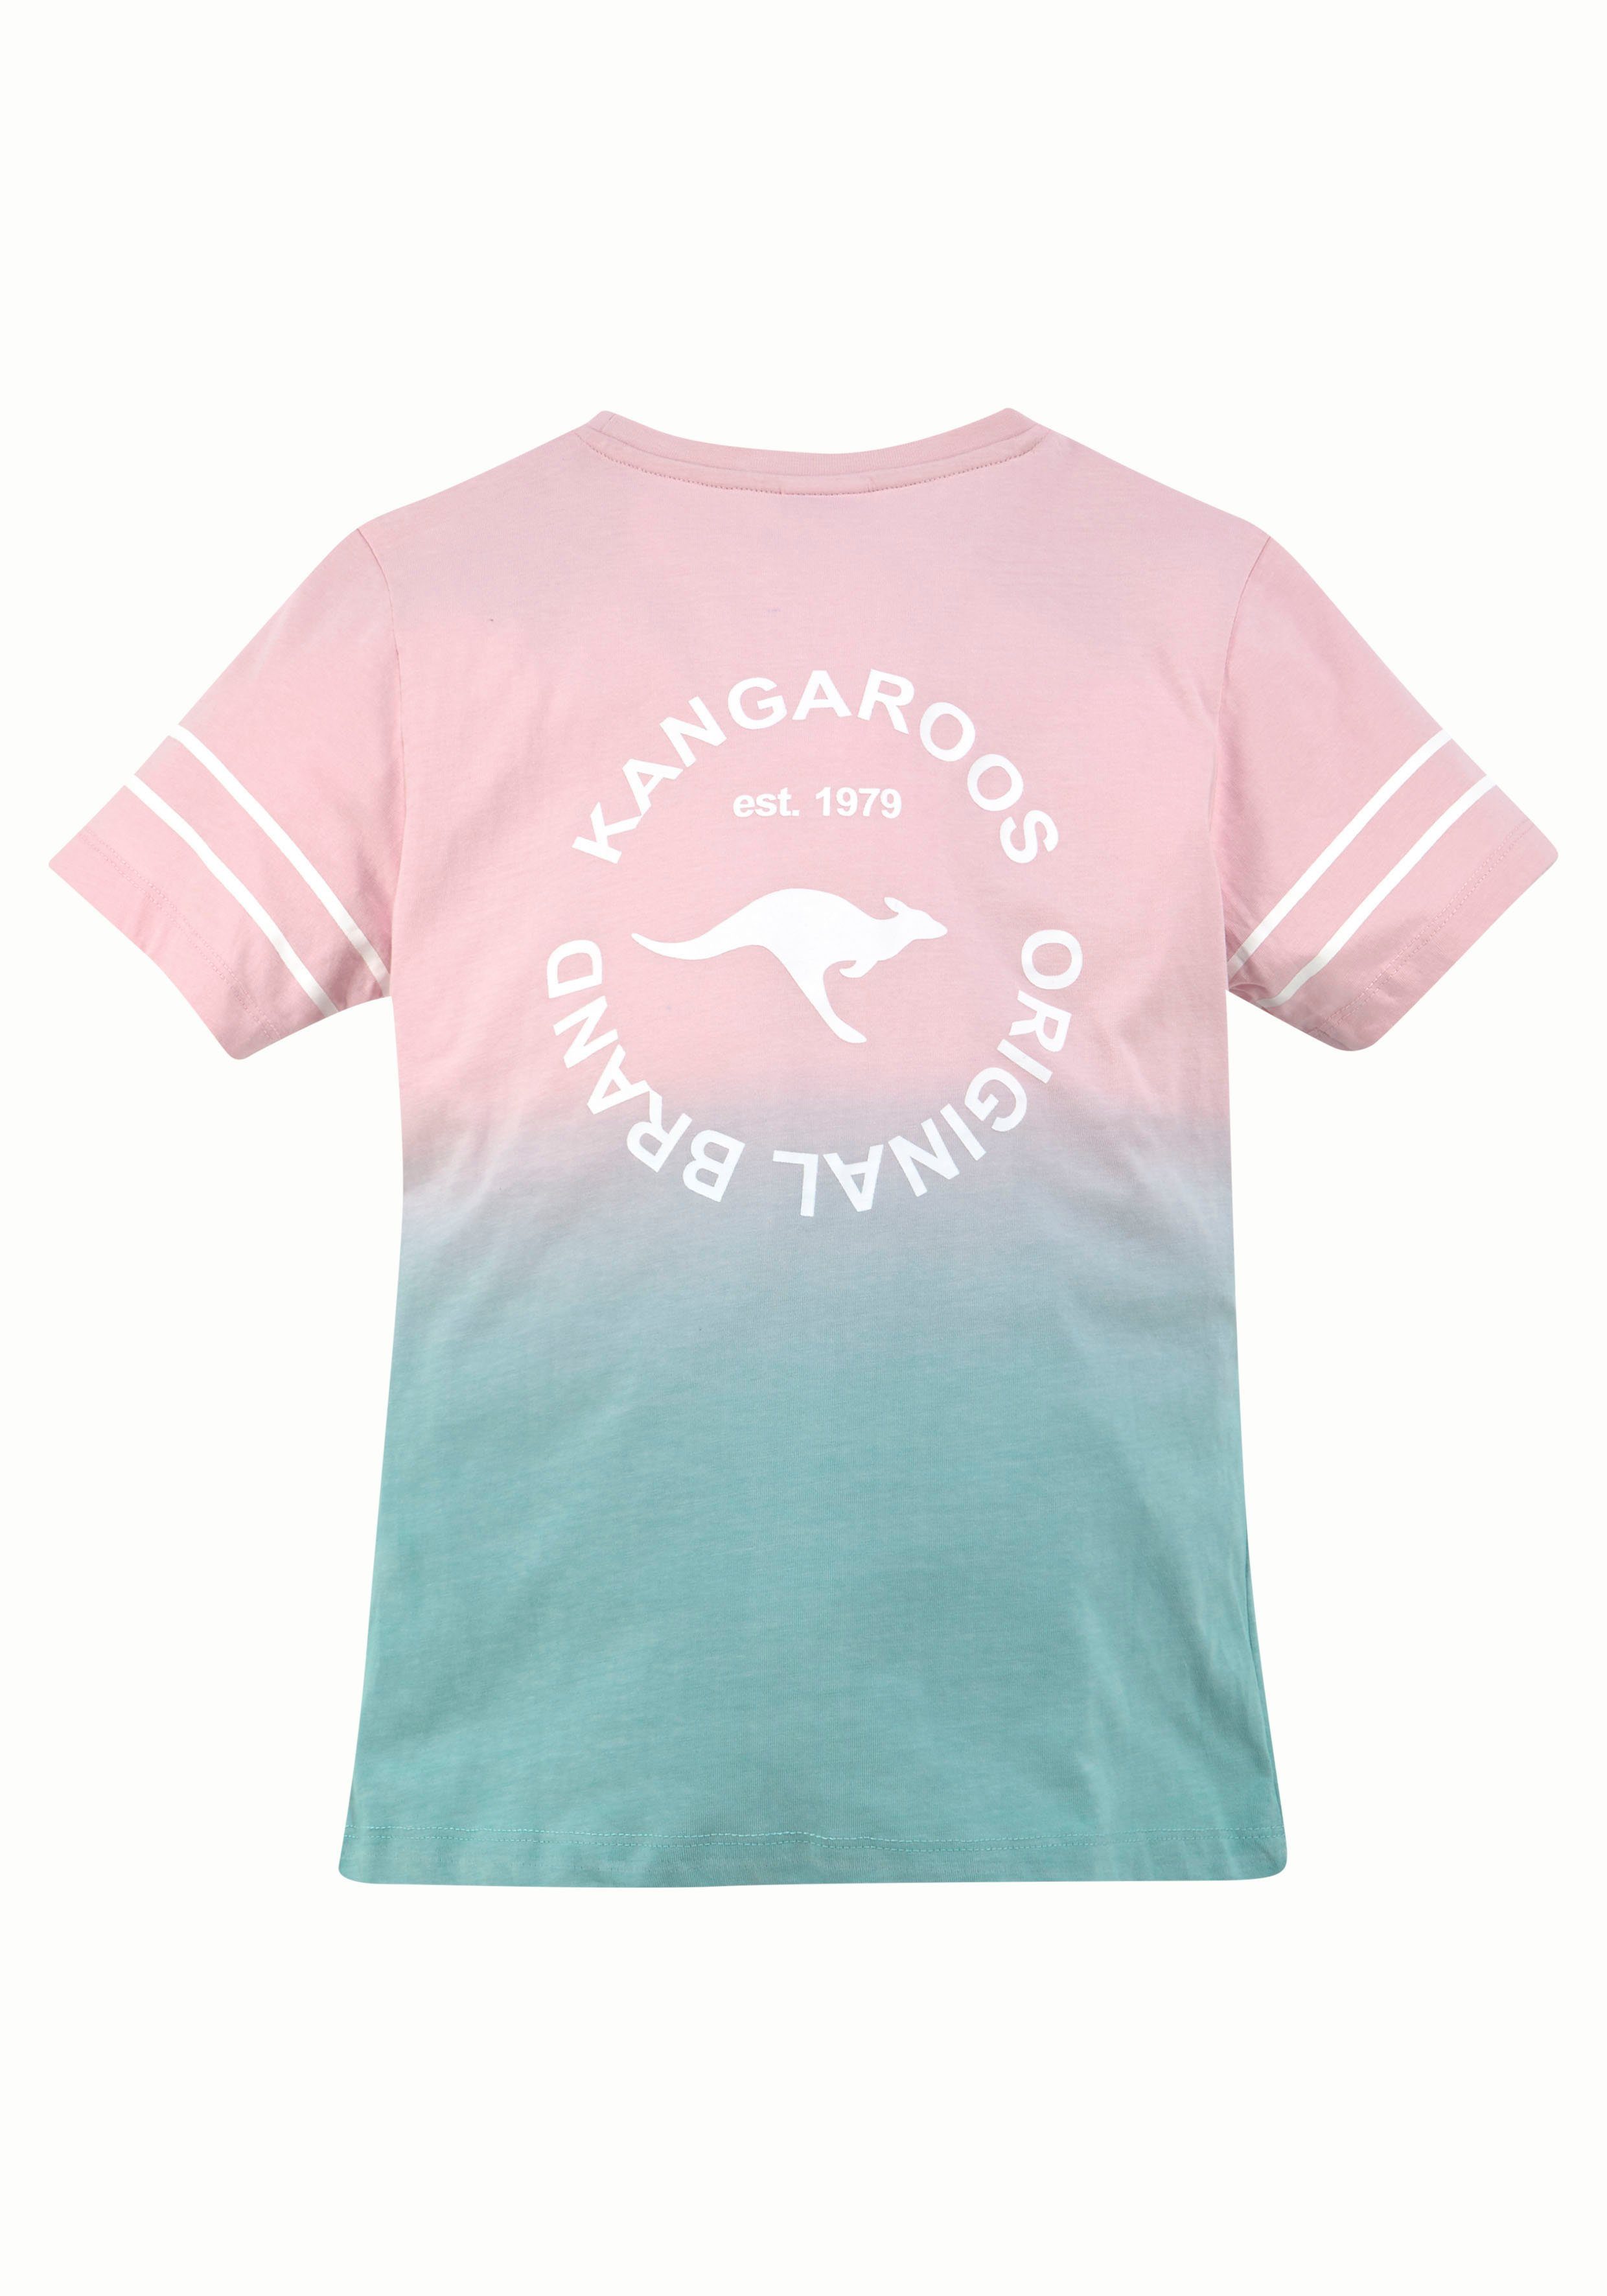 Weite in KangaROOS bequemer T-Shirt